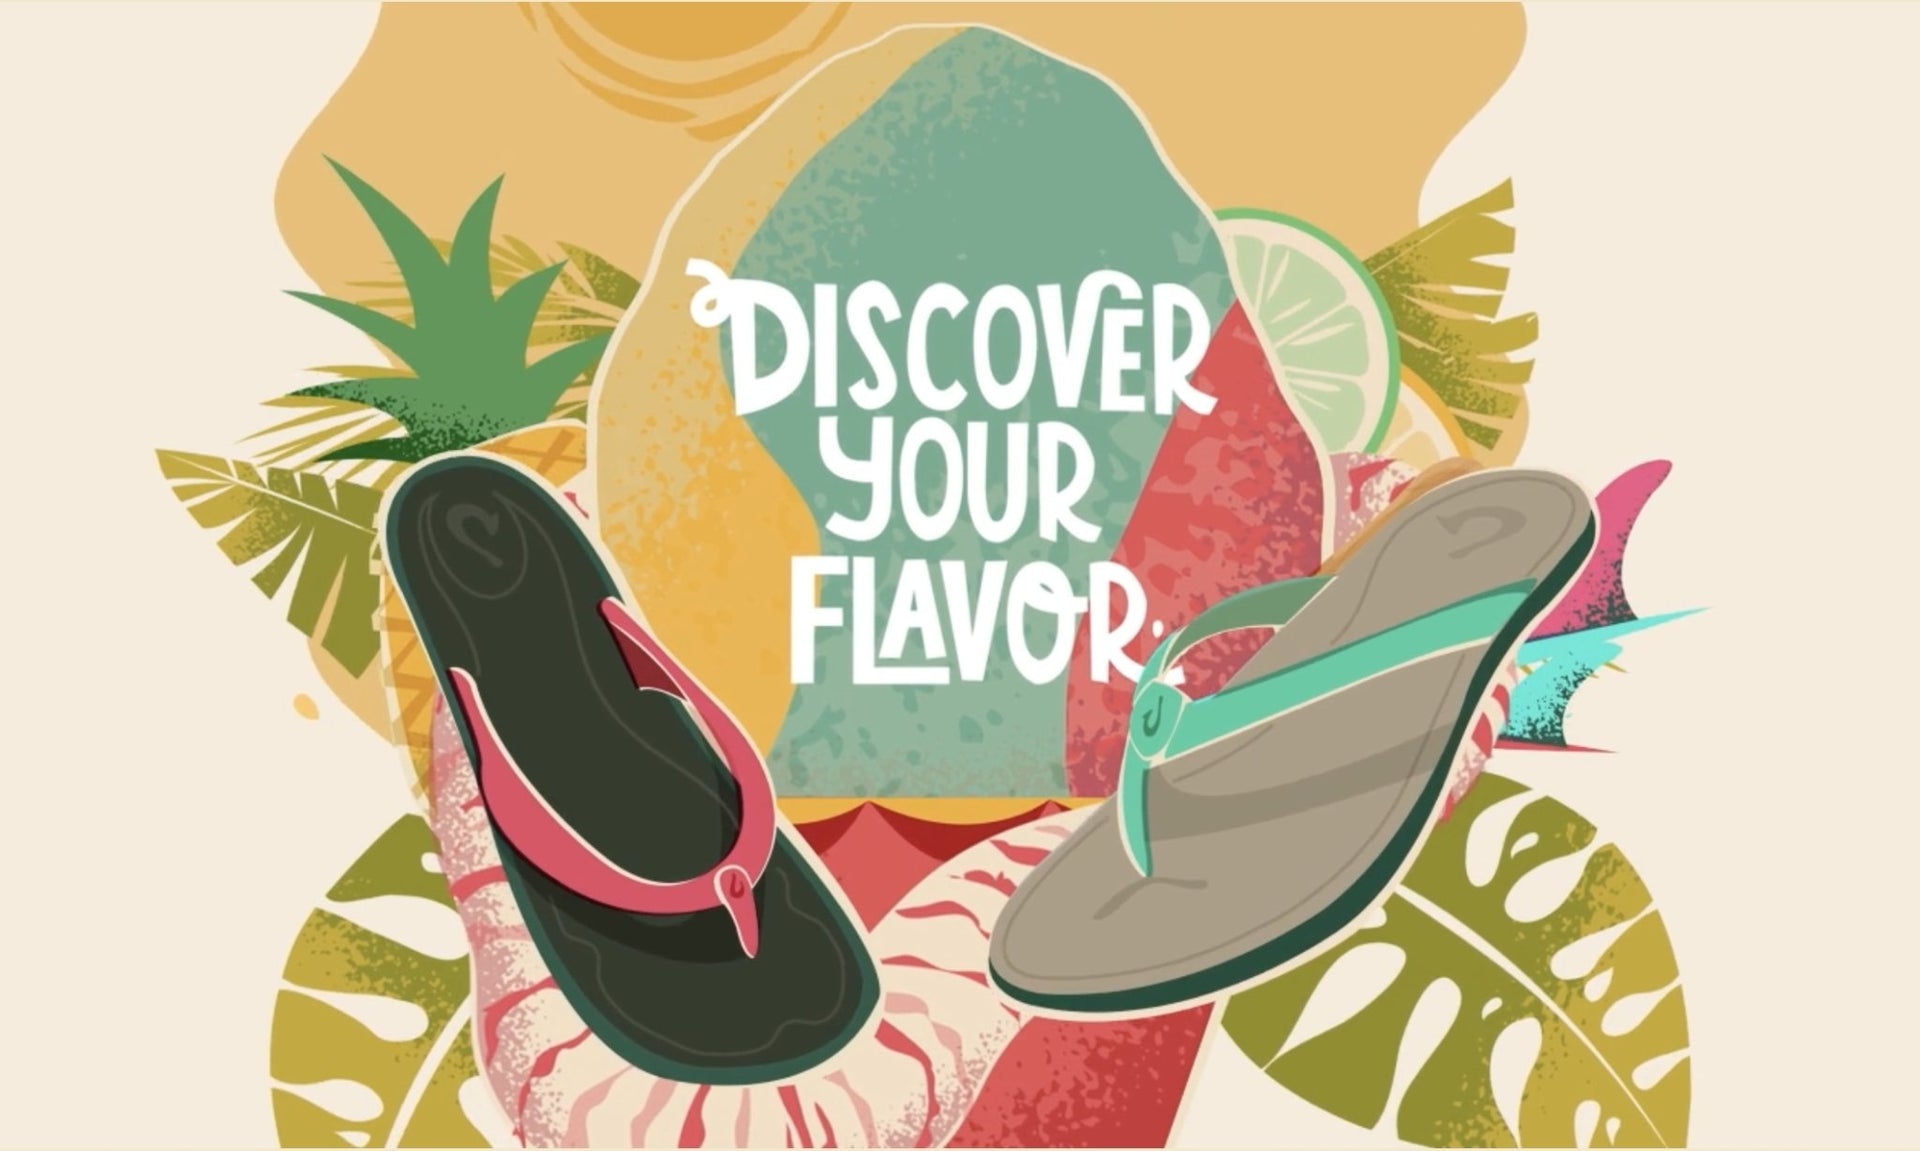 Nick Kuchar vintage Discover Your Flavor digital campaign art